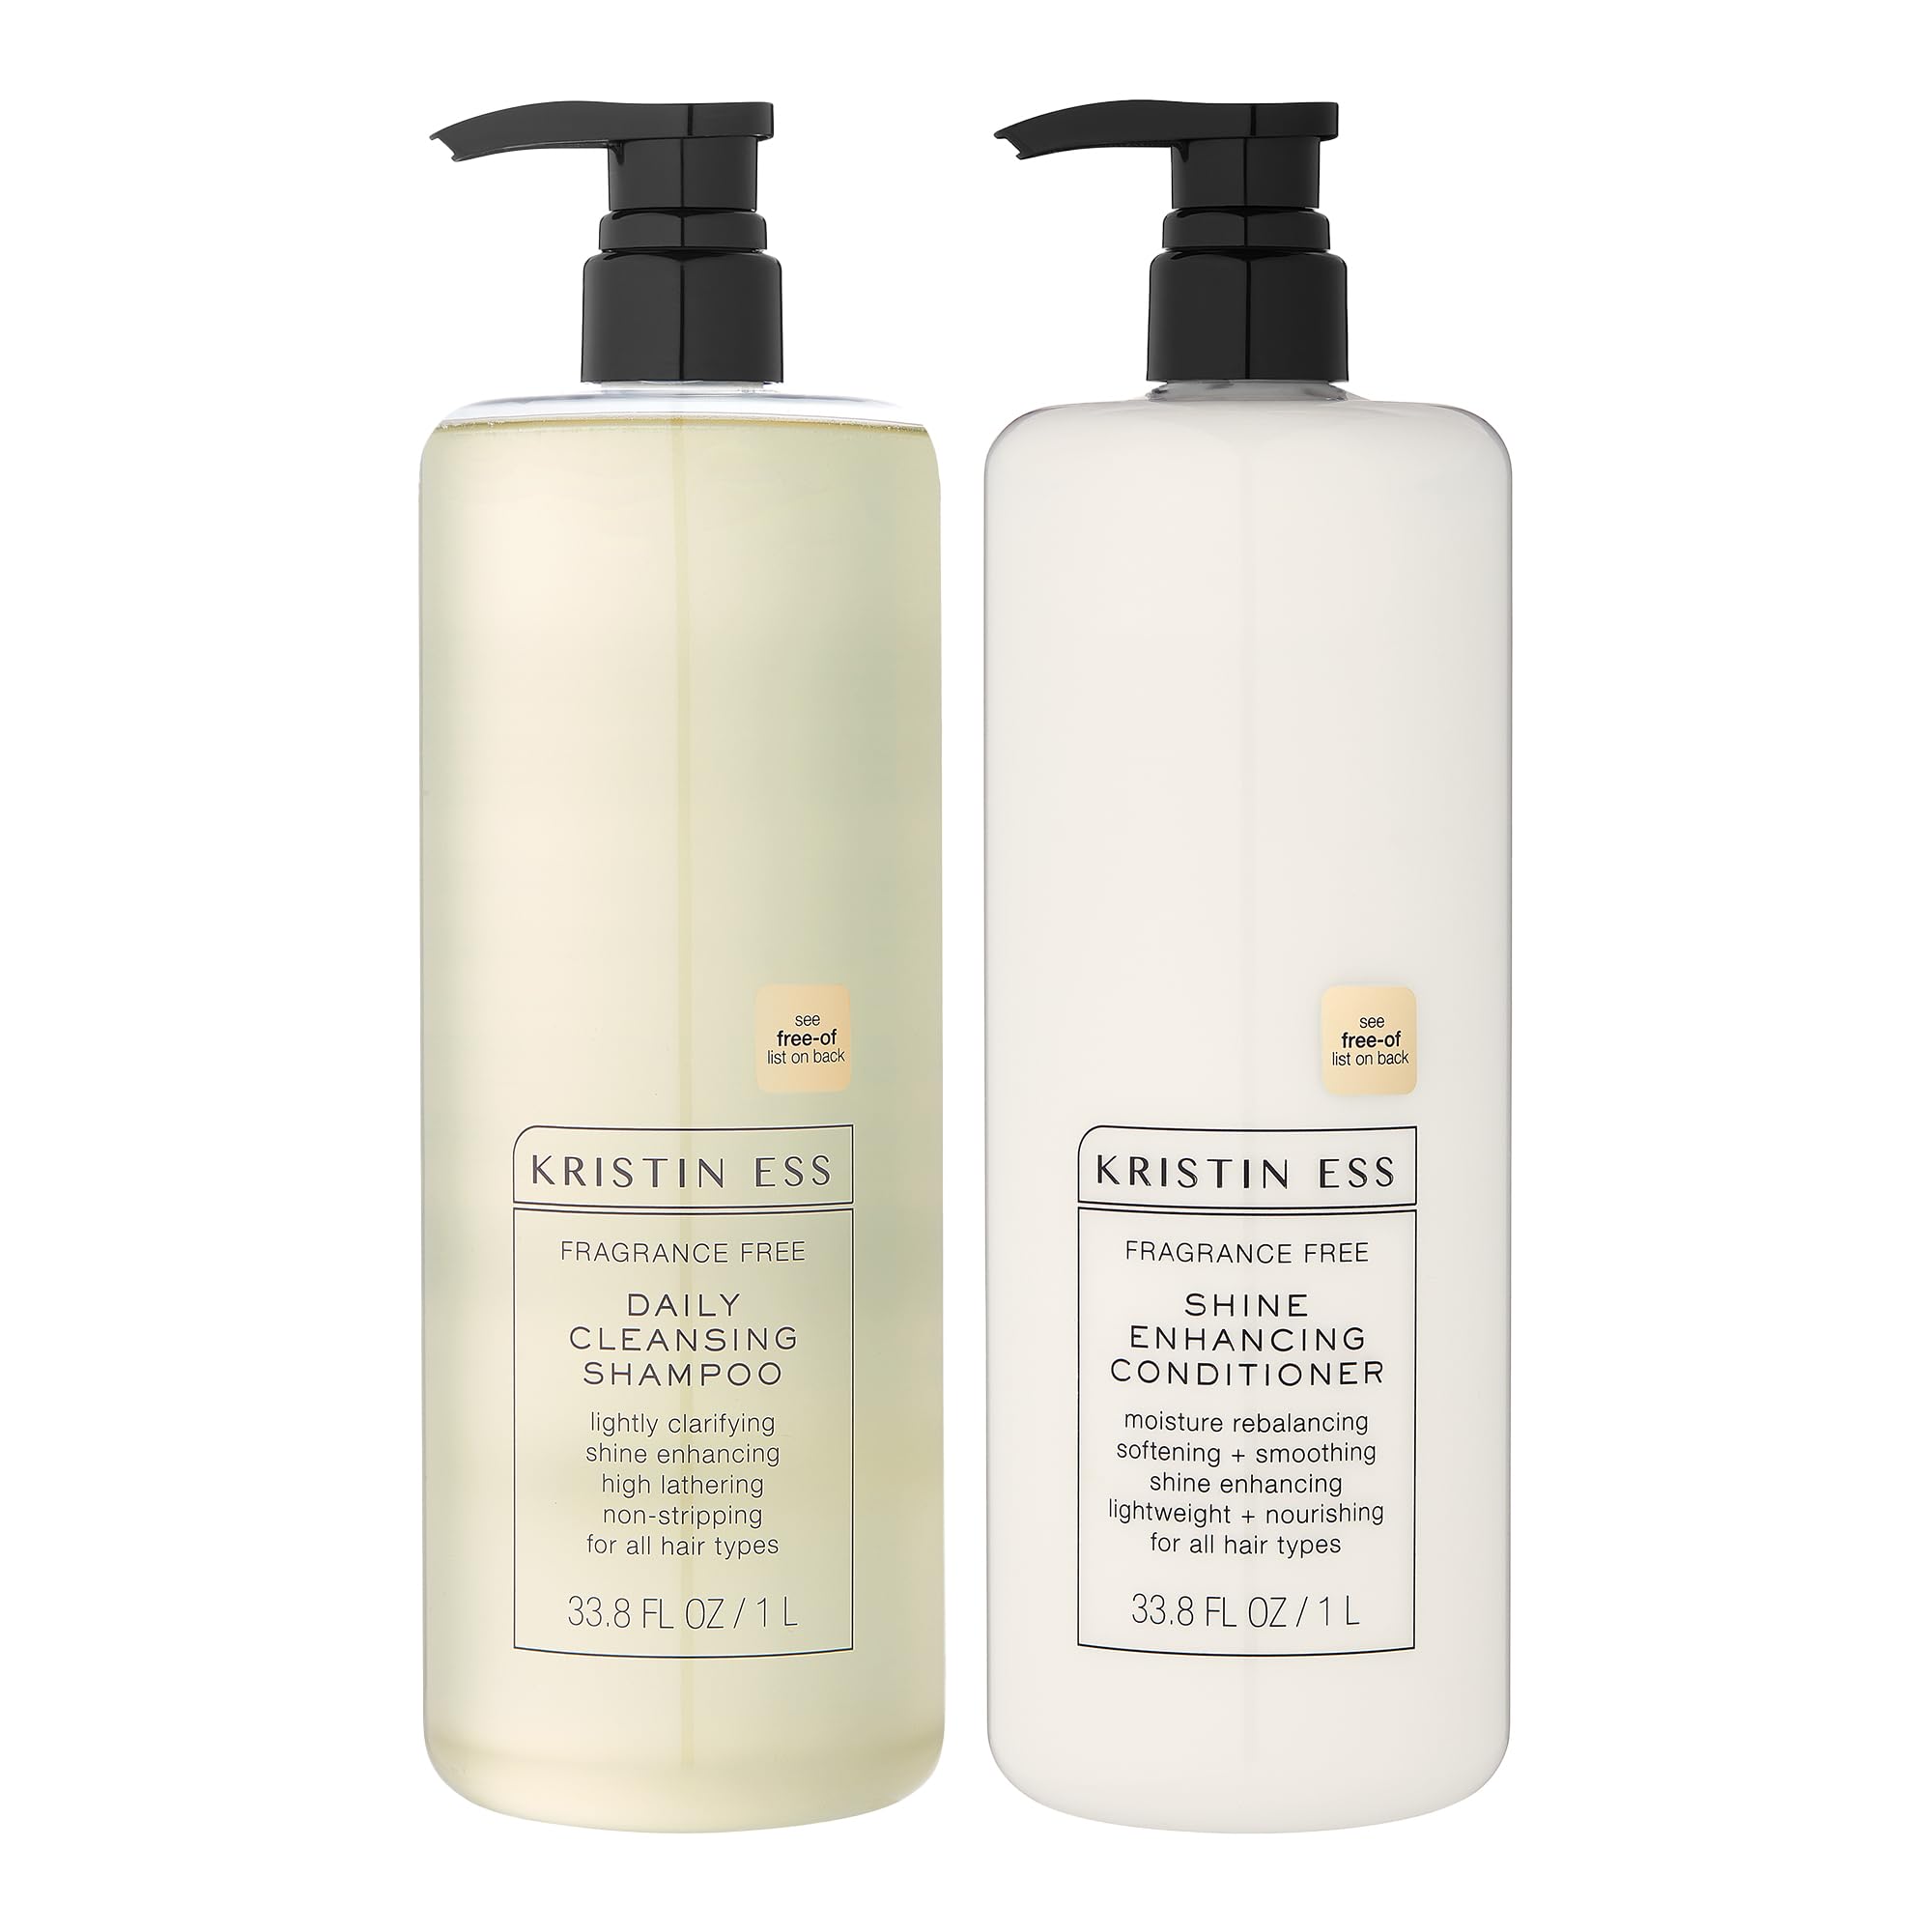 Kristin Ess Hair Fragrance Free Shampoo and Conditioner 1 Liter Set for Sensitive Skin and Scalp - Sulfate Free and Color Safe Shampoo and Conditioner - Hydrating + Moisturizing - Vegan + Cruelty Free